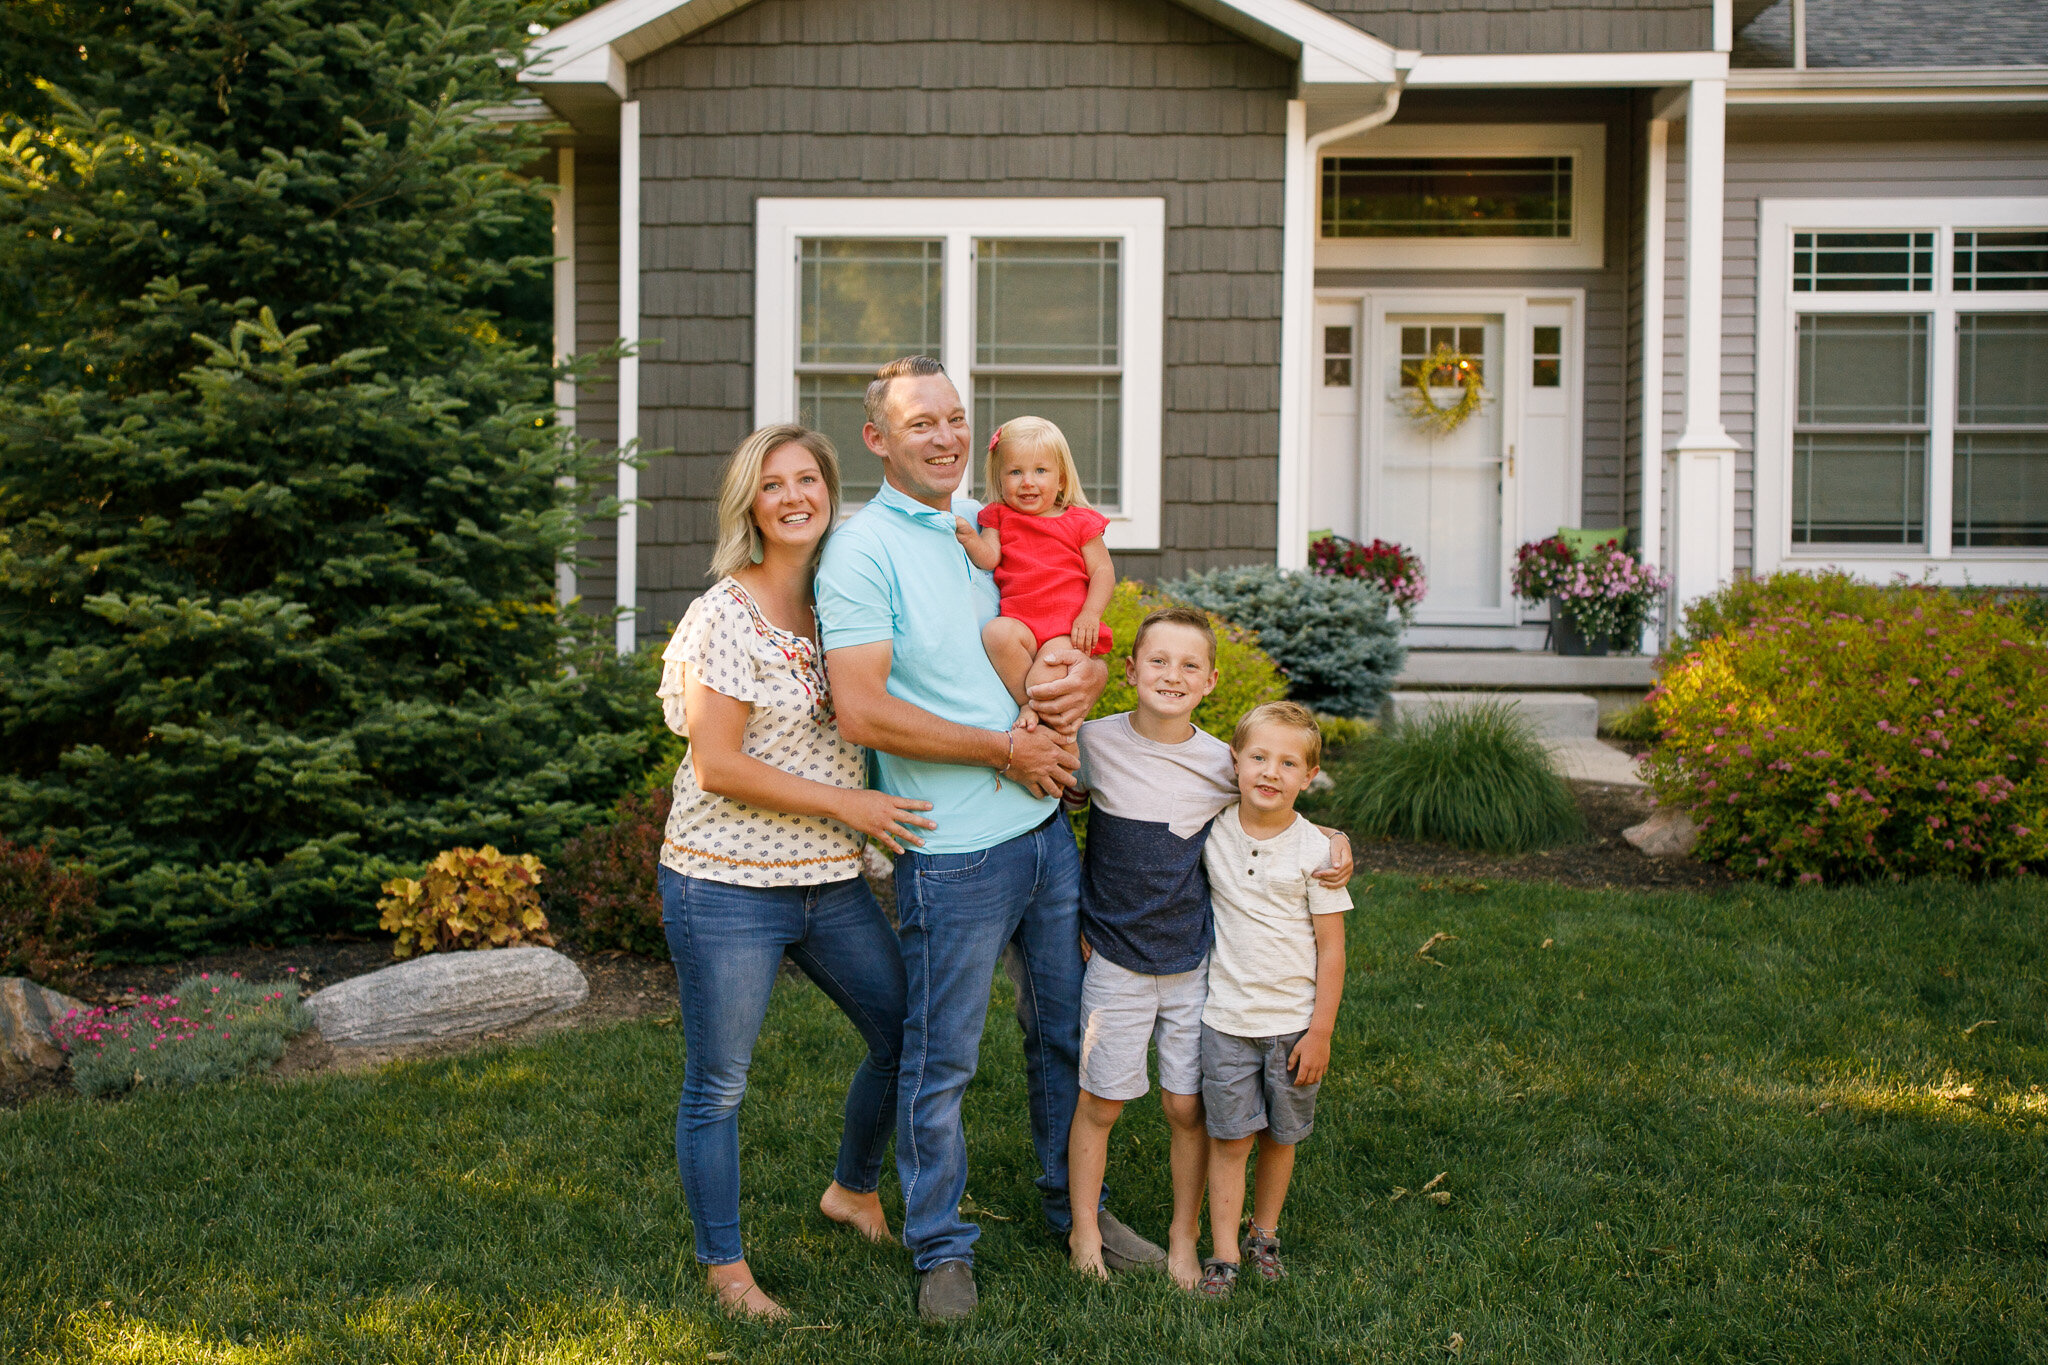 Clabuesch Family - Grand Rapids Family Photographer - Grand Rapids Lifestyle Photographer - Jessica Darling - J Darling Photo044.jpg